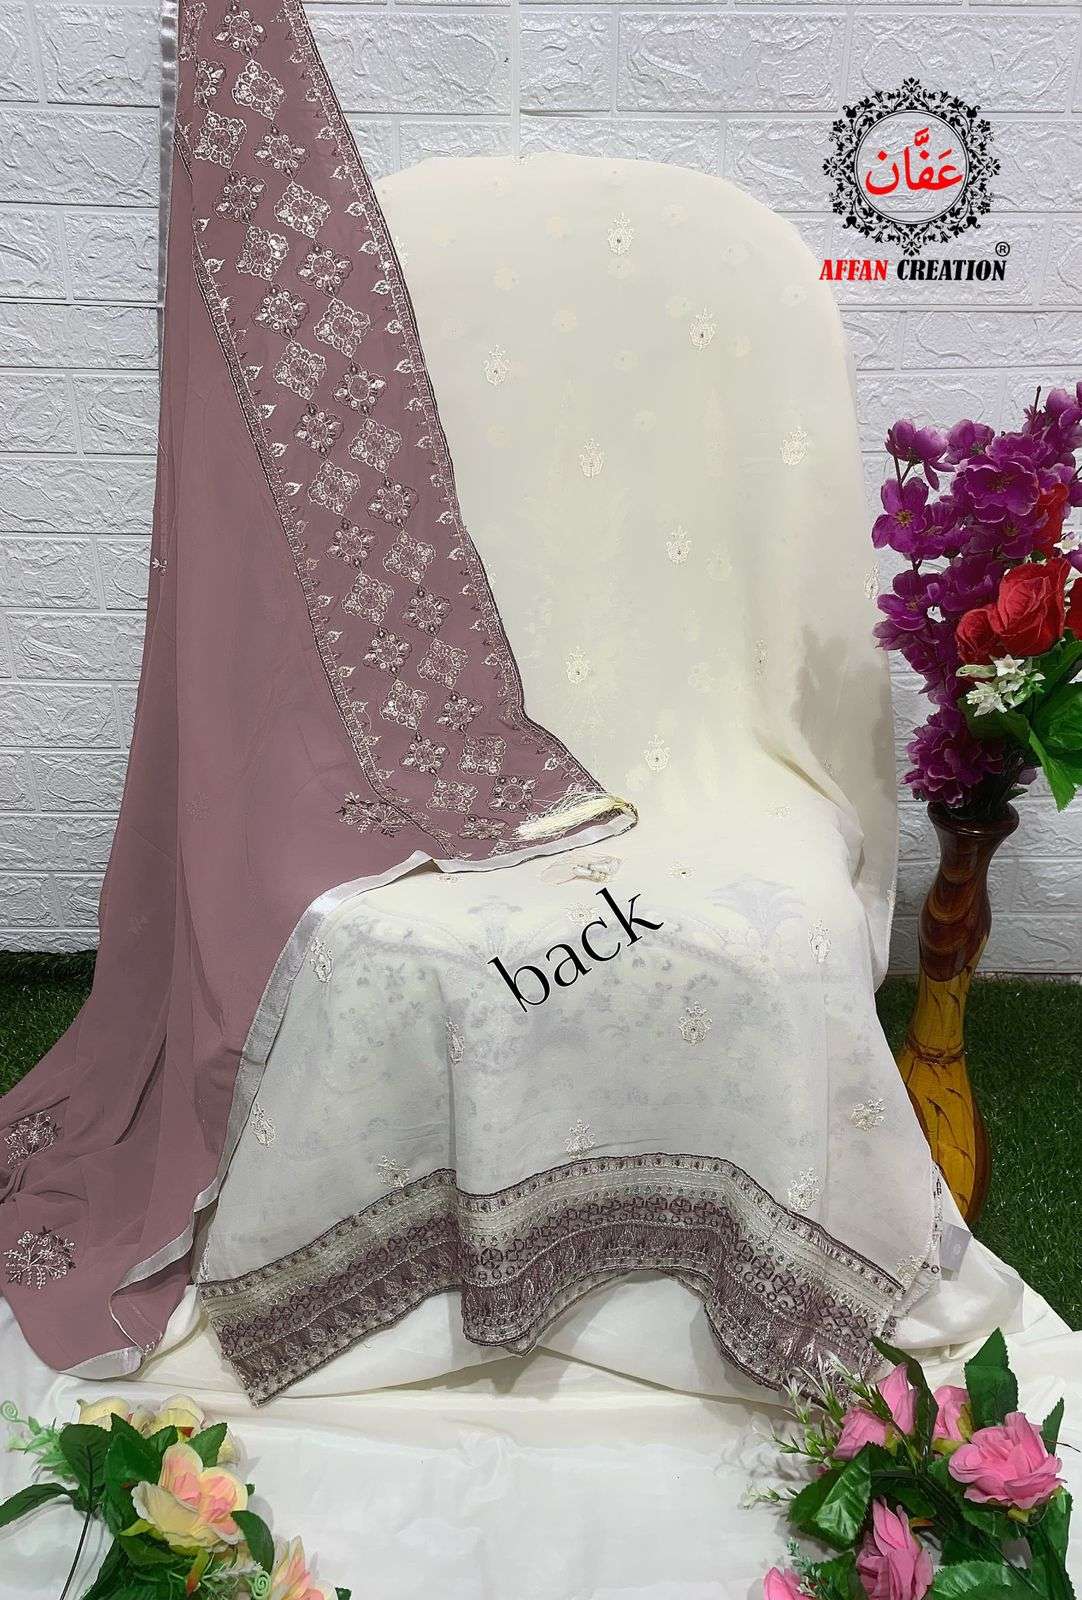 affan creation 5001 colour series designer pakistani salwar kameez at wholesaler price surat gujarat india